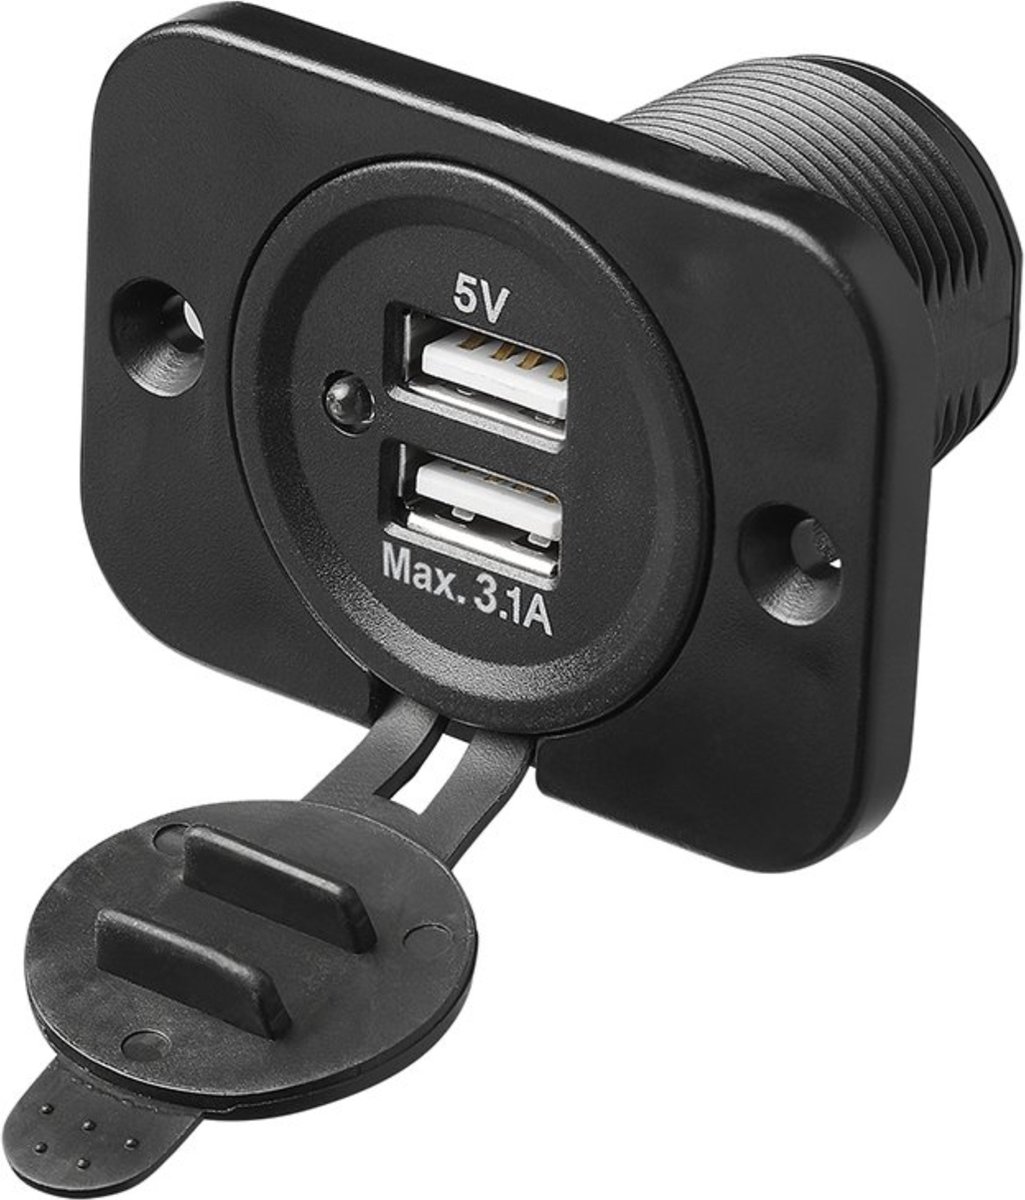 Pro Plus USB Inbouwdoos - Tweevoudig - 2100mA - 12 Volt en 24 Volt - Ø 29 mm